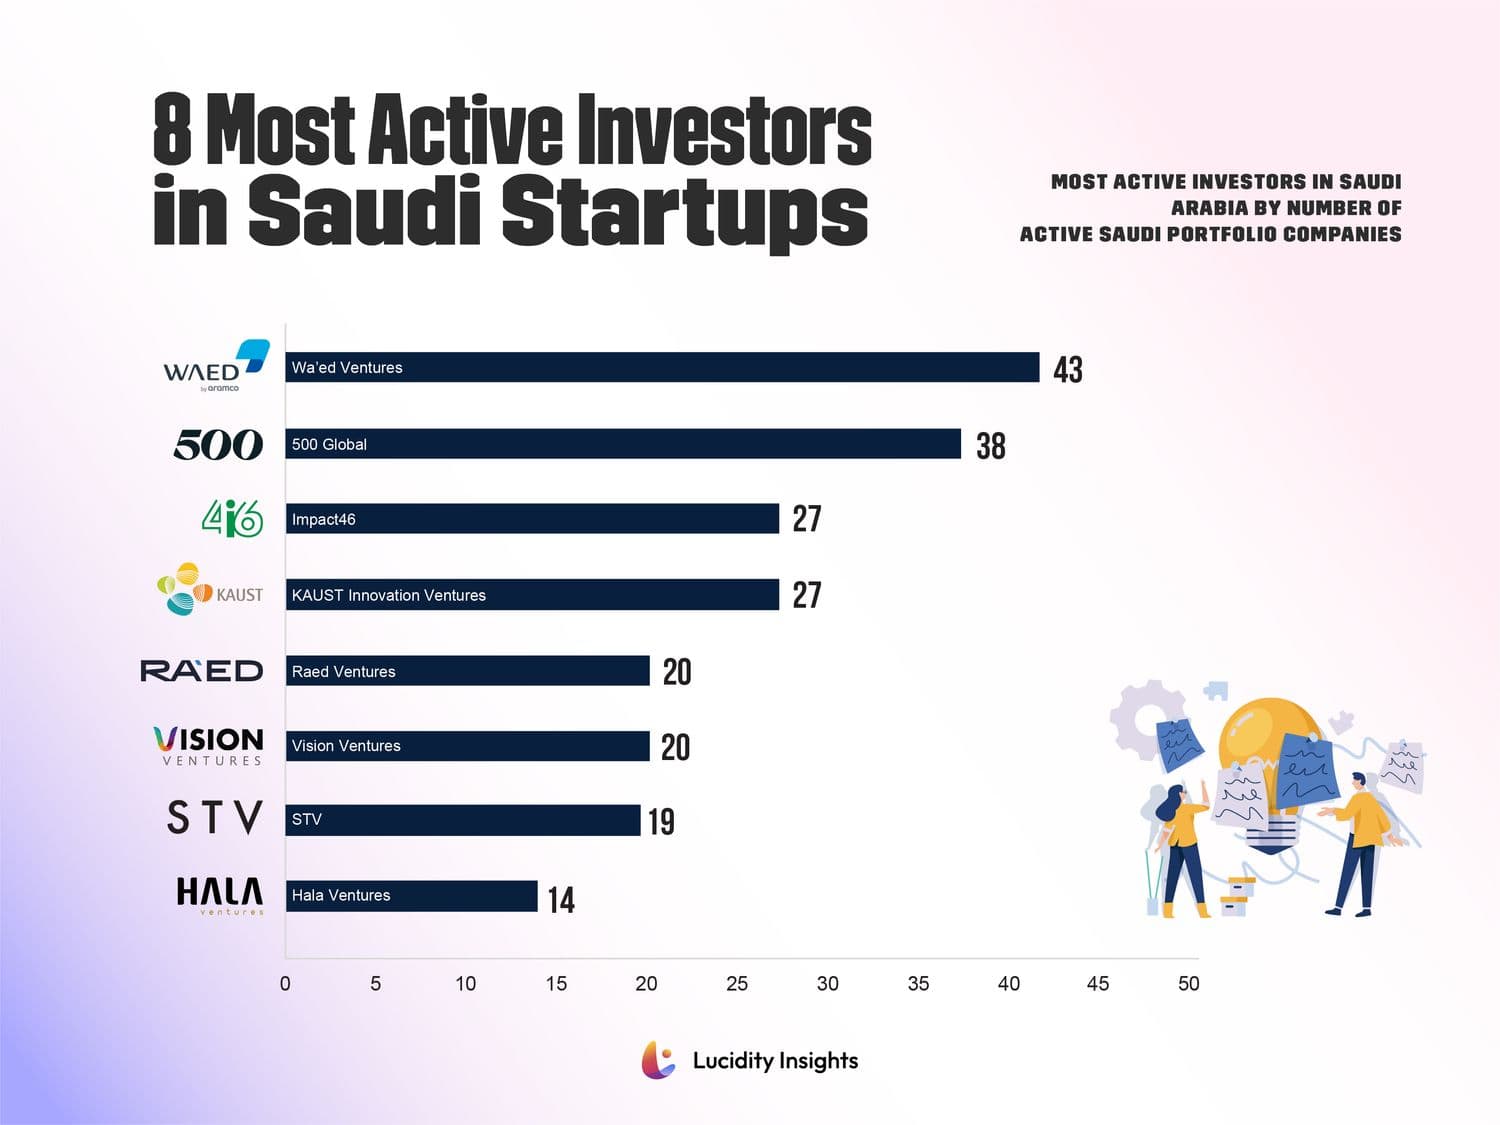 The Most Active Investors in Saudi